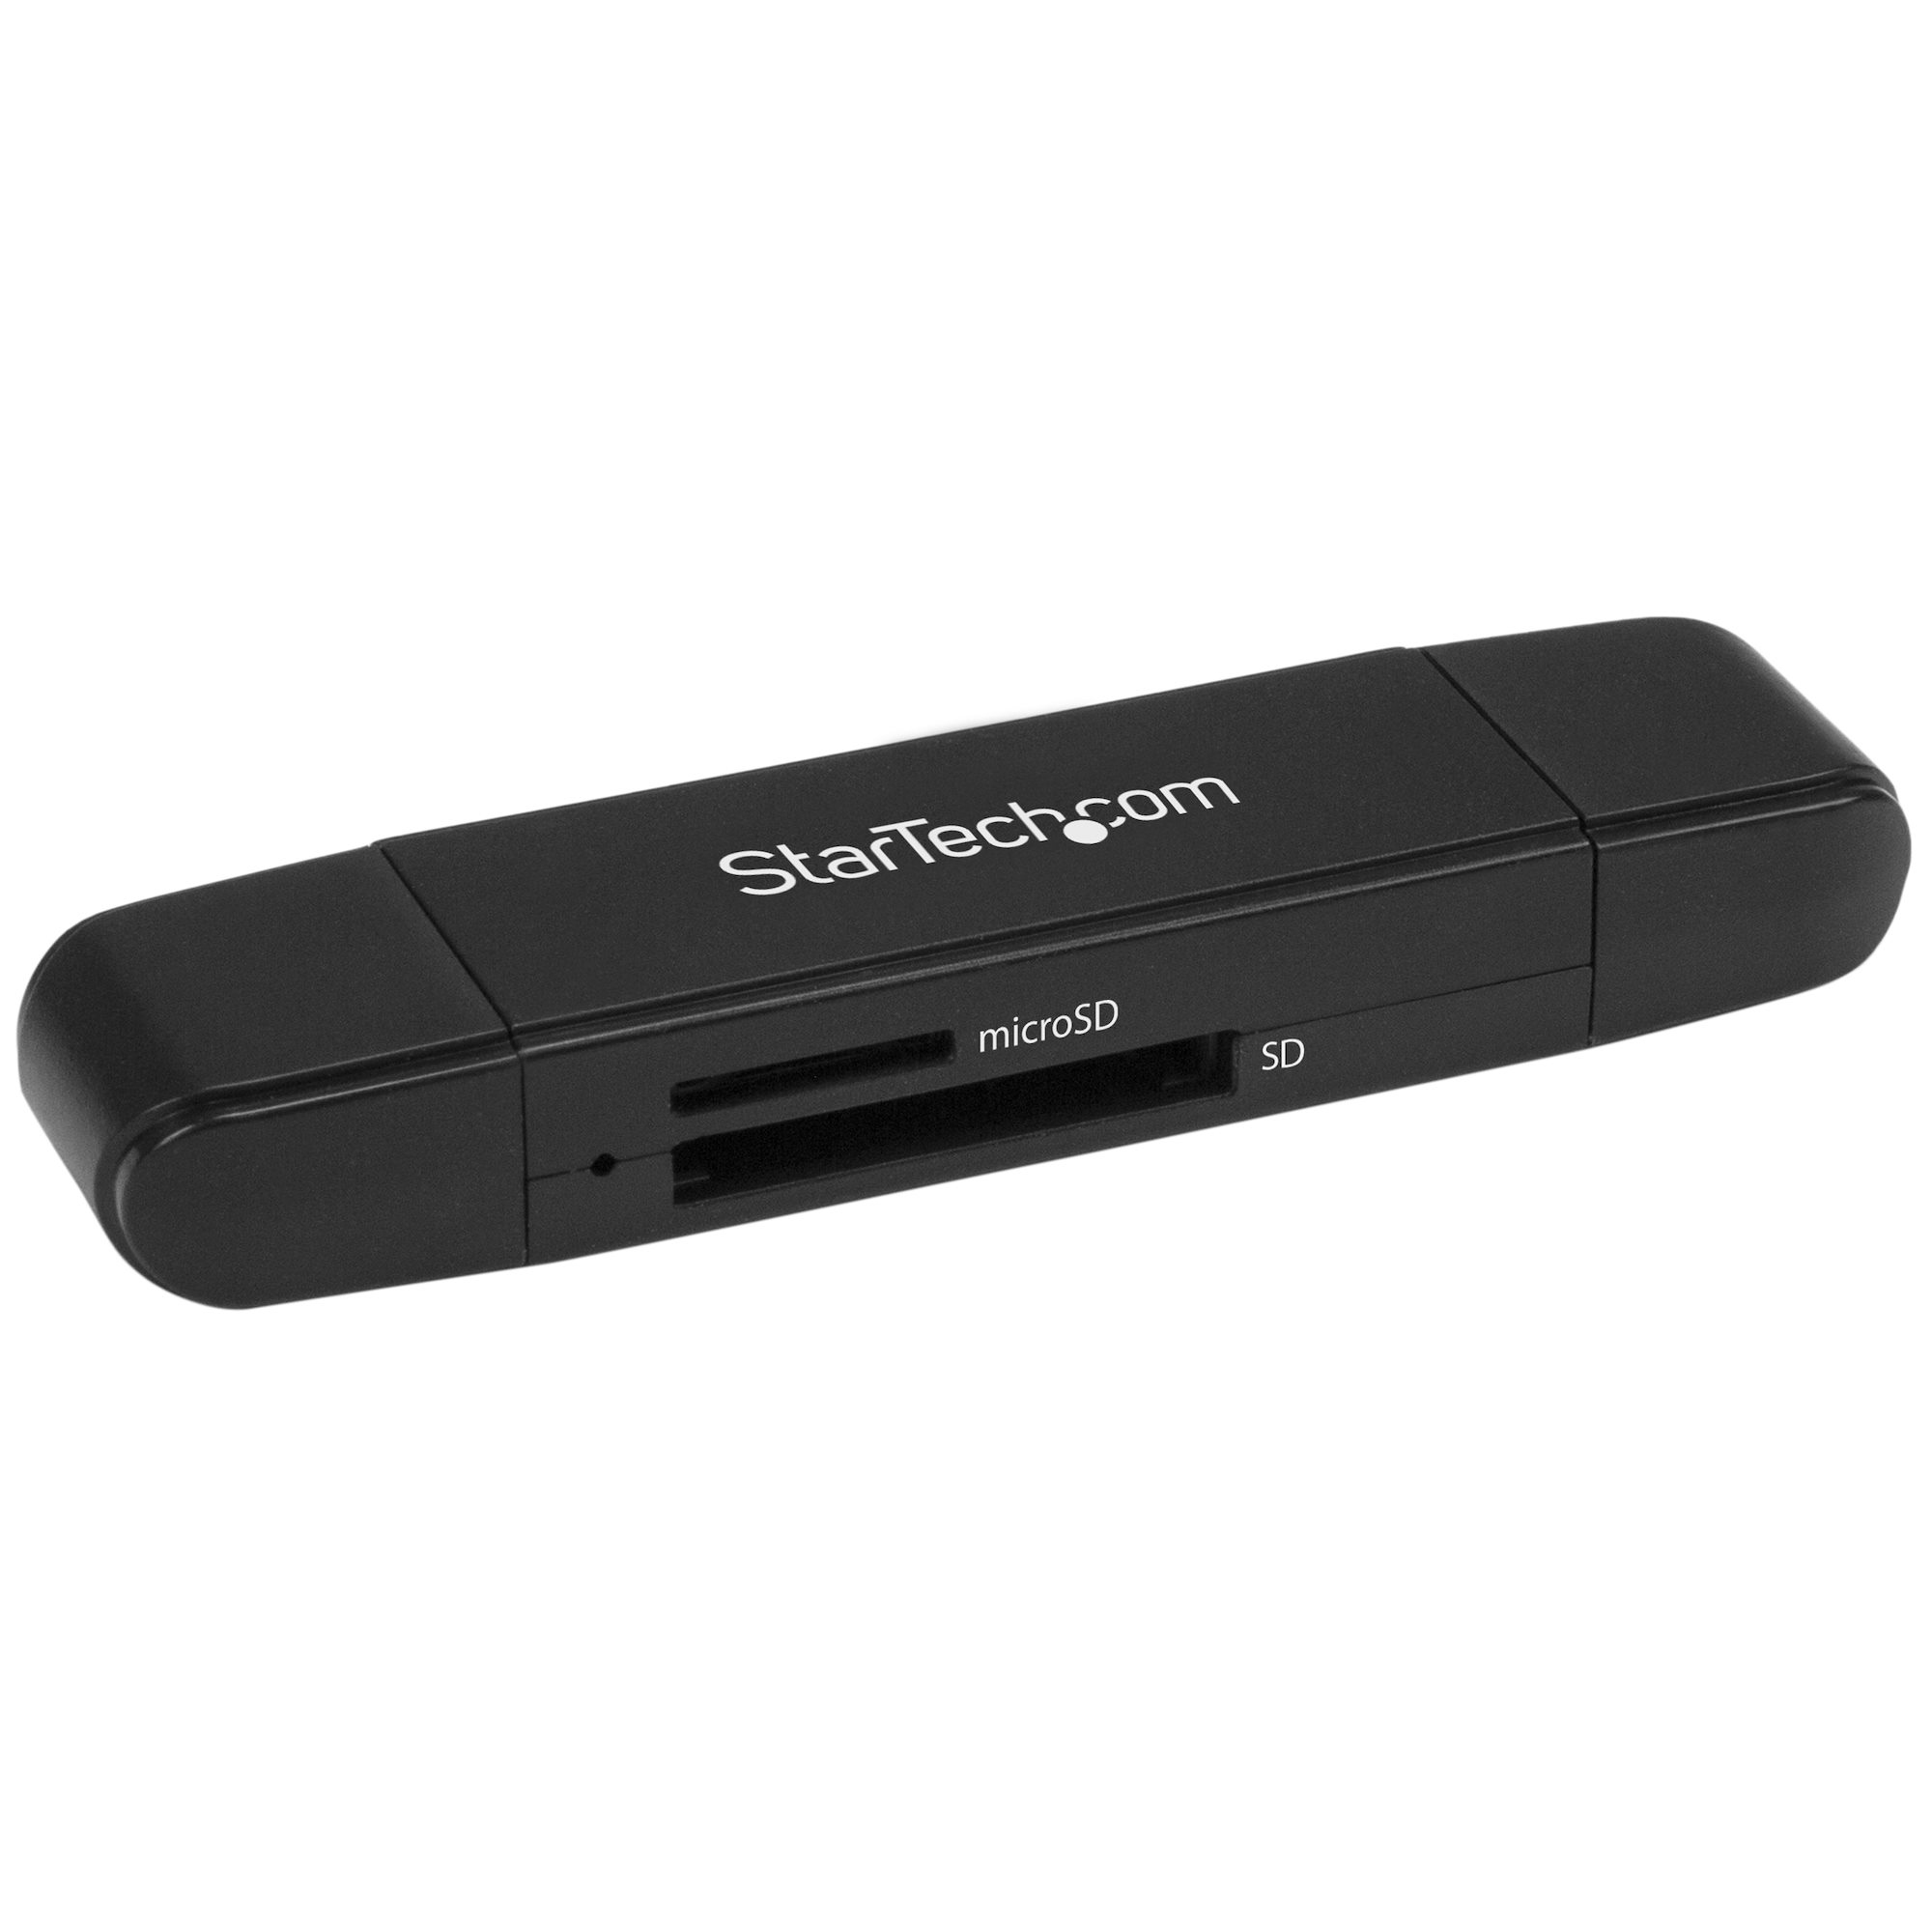 StarTech.com USB Memory Card Reader - USB 3.0 SD Card Reader - Compact - 5Gbps - USB Card Reader - MicroSD USB Adapter - Kartenleser (MMC, SD, microSD, SDHC, microSDHC, SDXC, microSDXC)